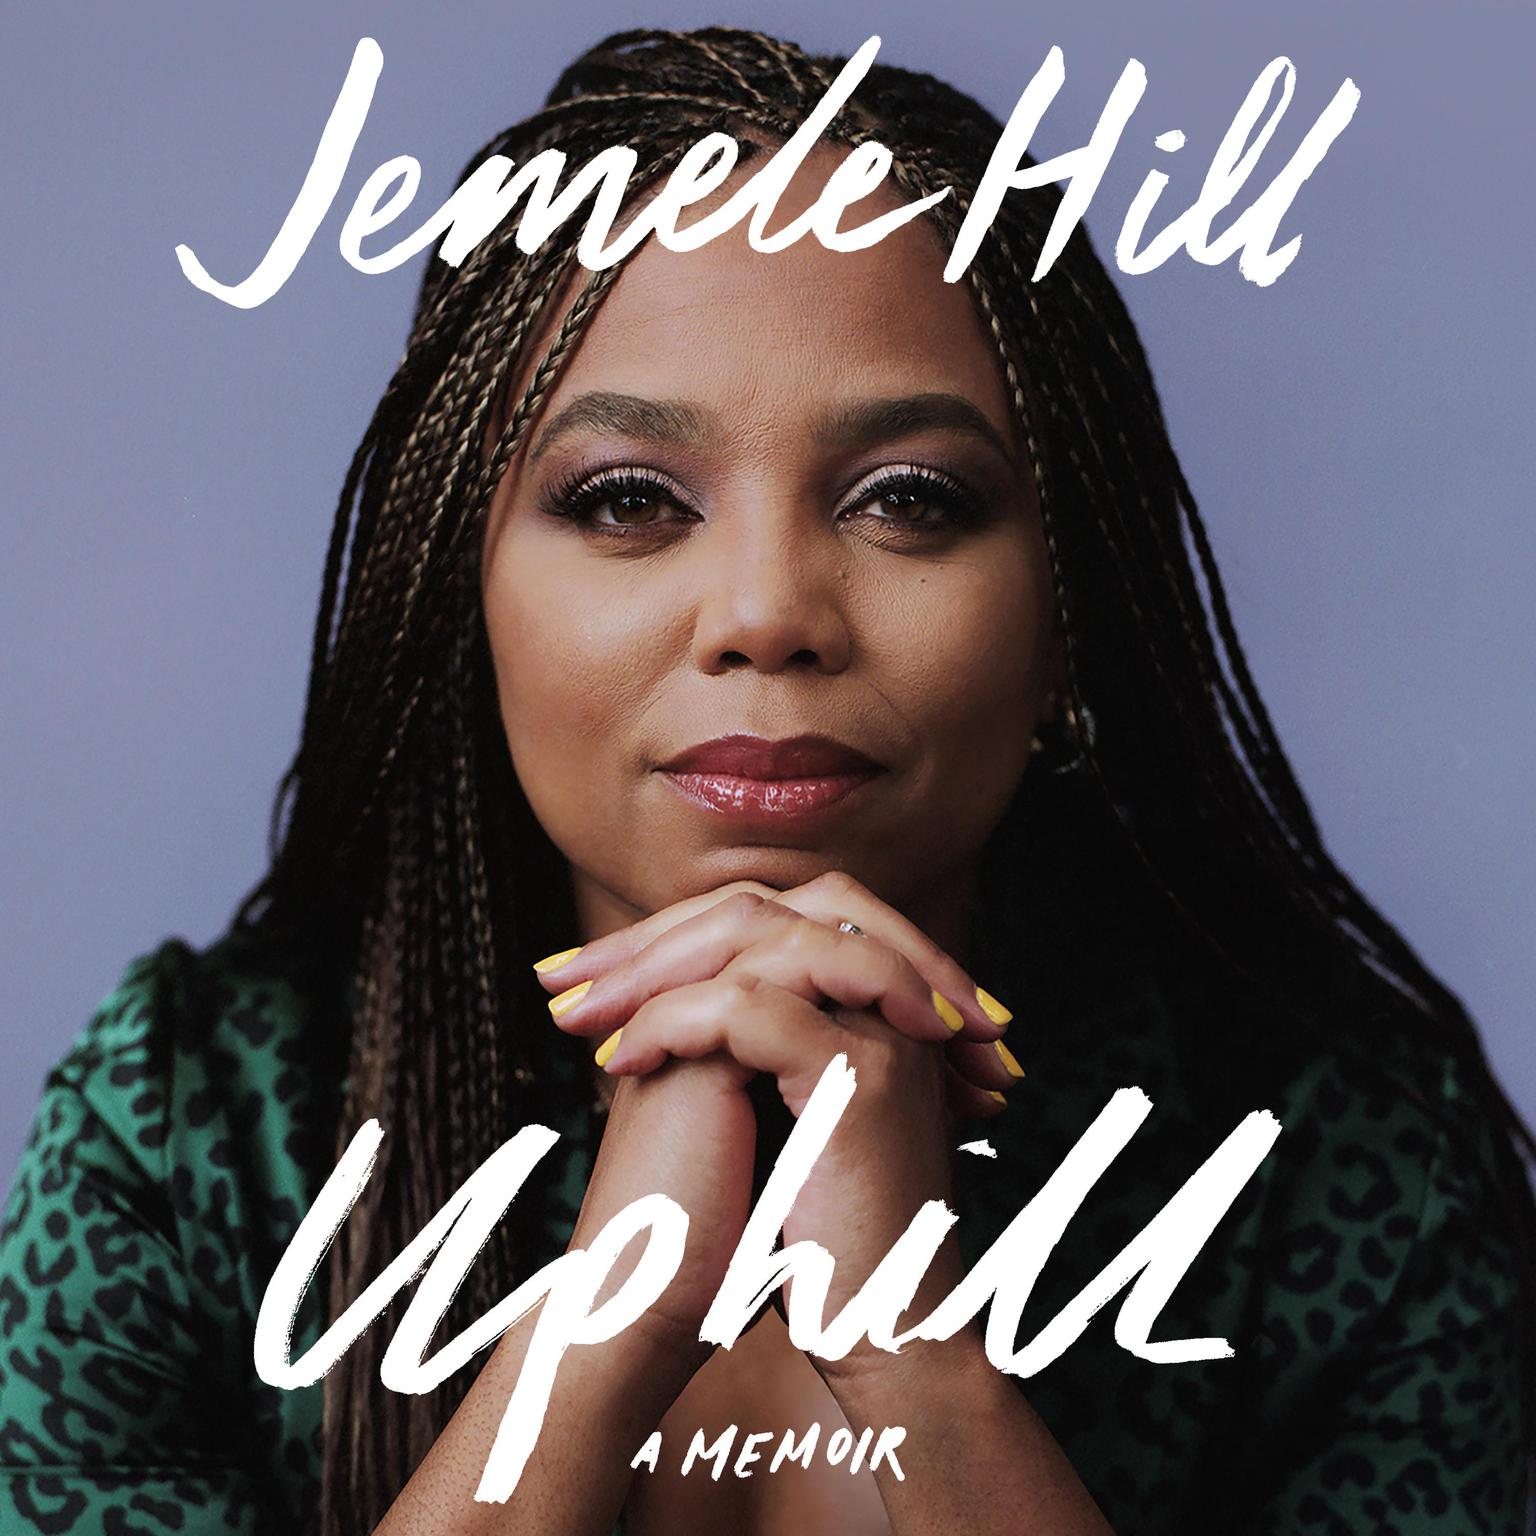 Uphill: A Memoir Audiobook, by Jemele Hill